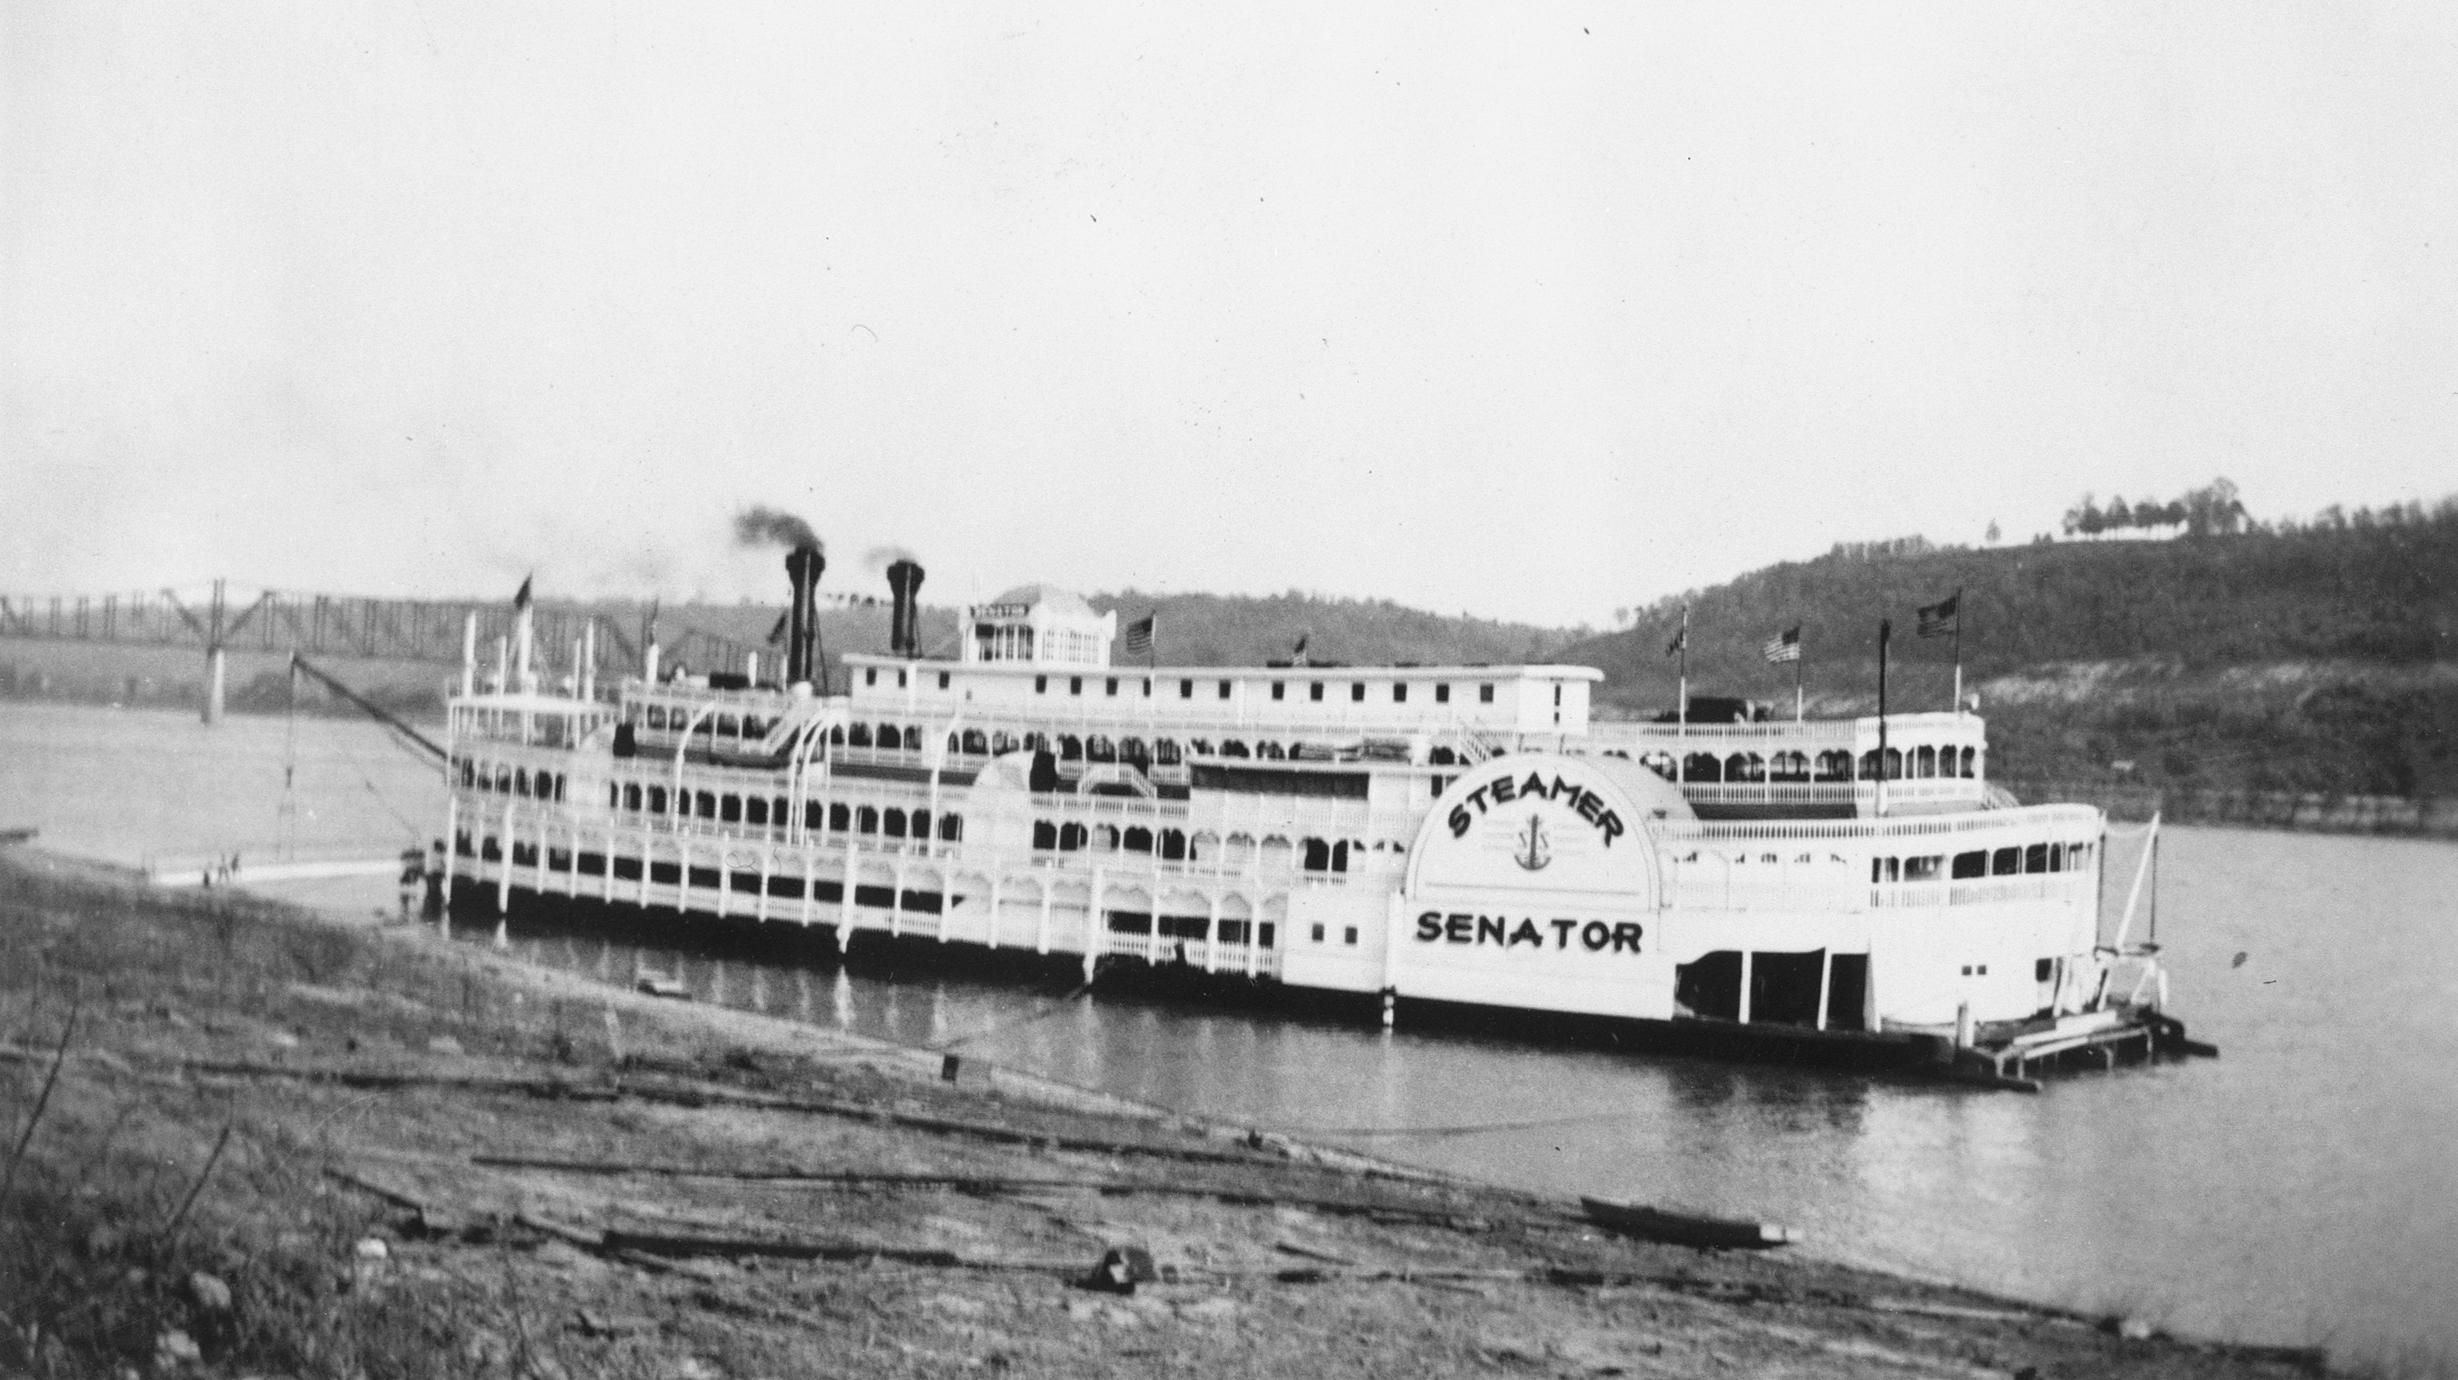 Senator (Packet/Excursion/Training boat, 1940-1953)